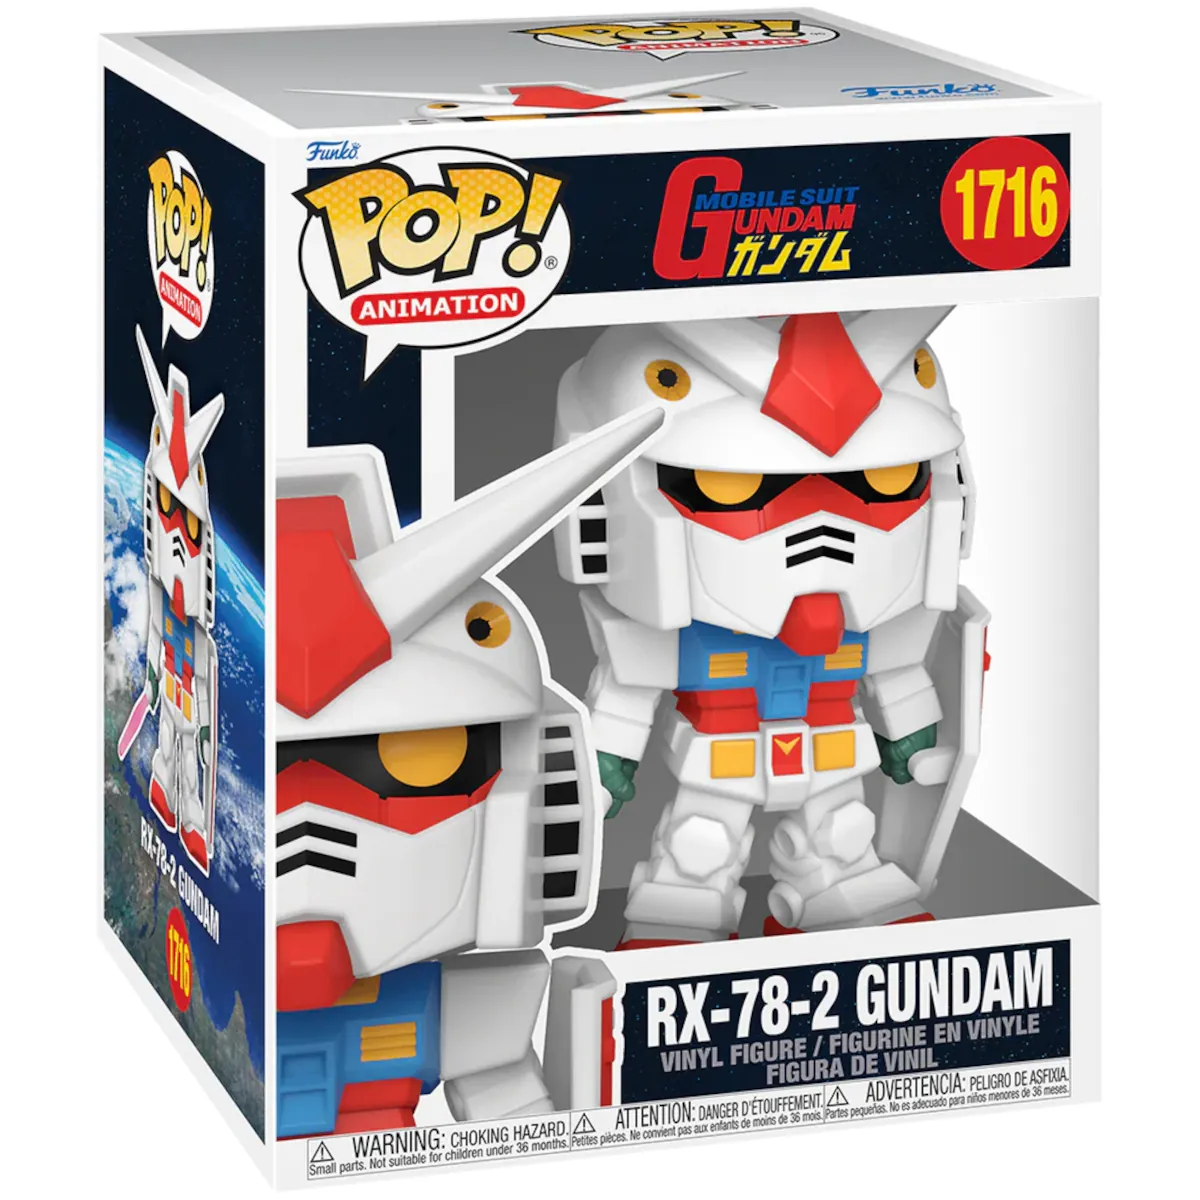 82983 Funko Pop! Animation - Mobile Suit Gundam - RX-78-2 Gundam Super Sized Collectable Vinyl Figure Box Front